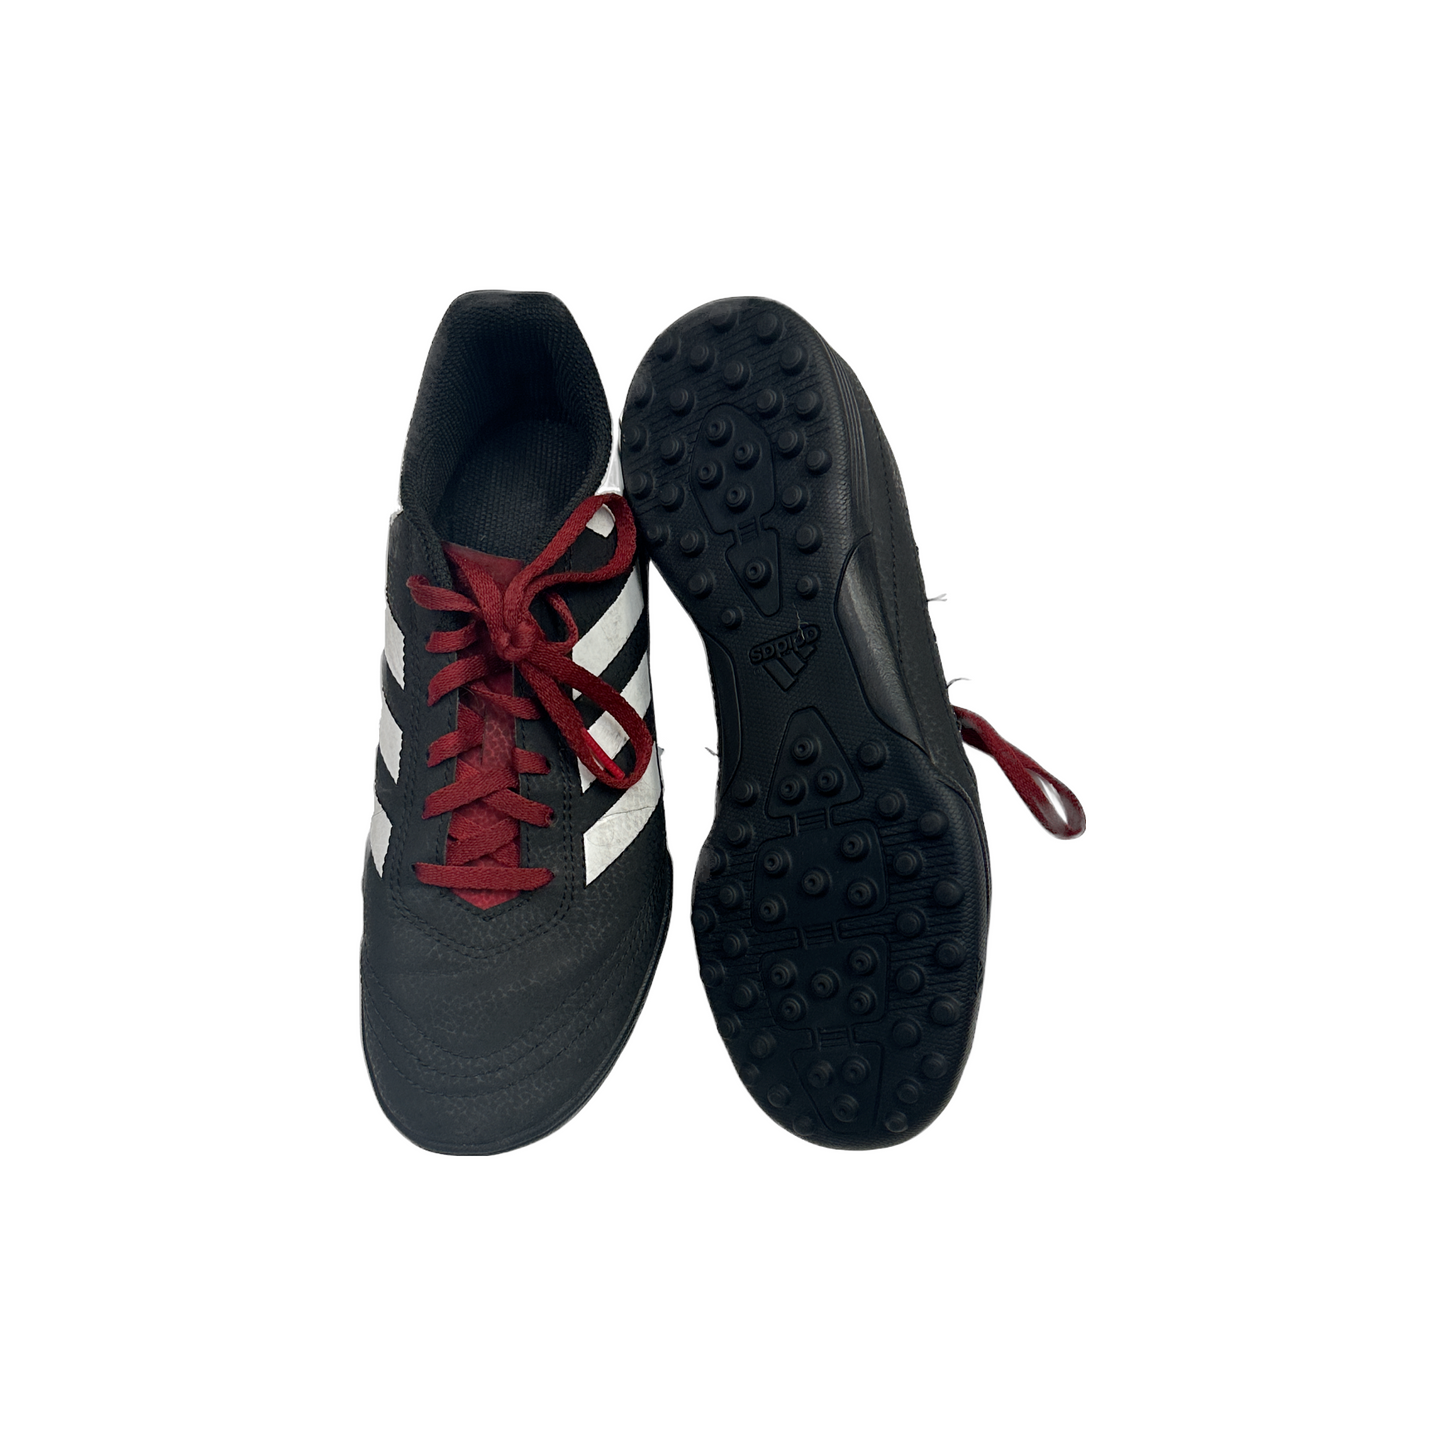 Adidas indoor lacrosse shoes - M5